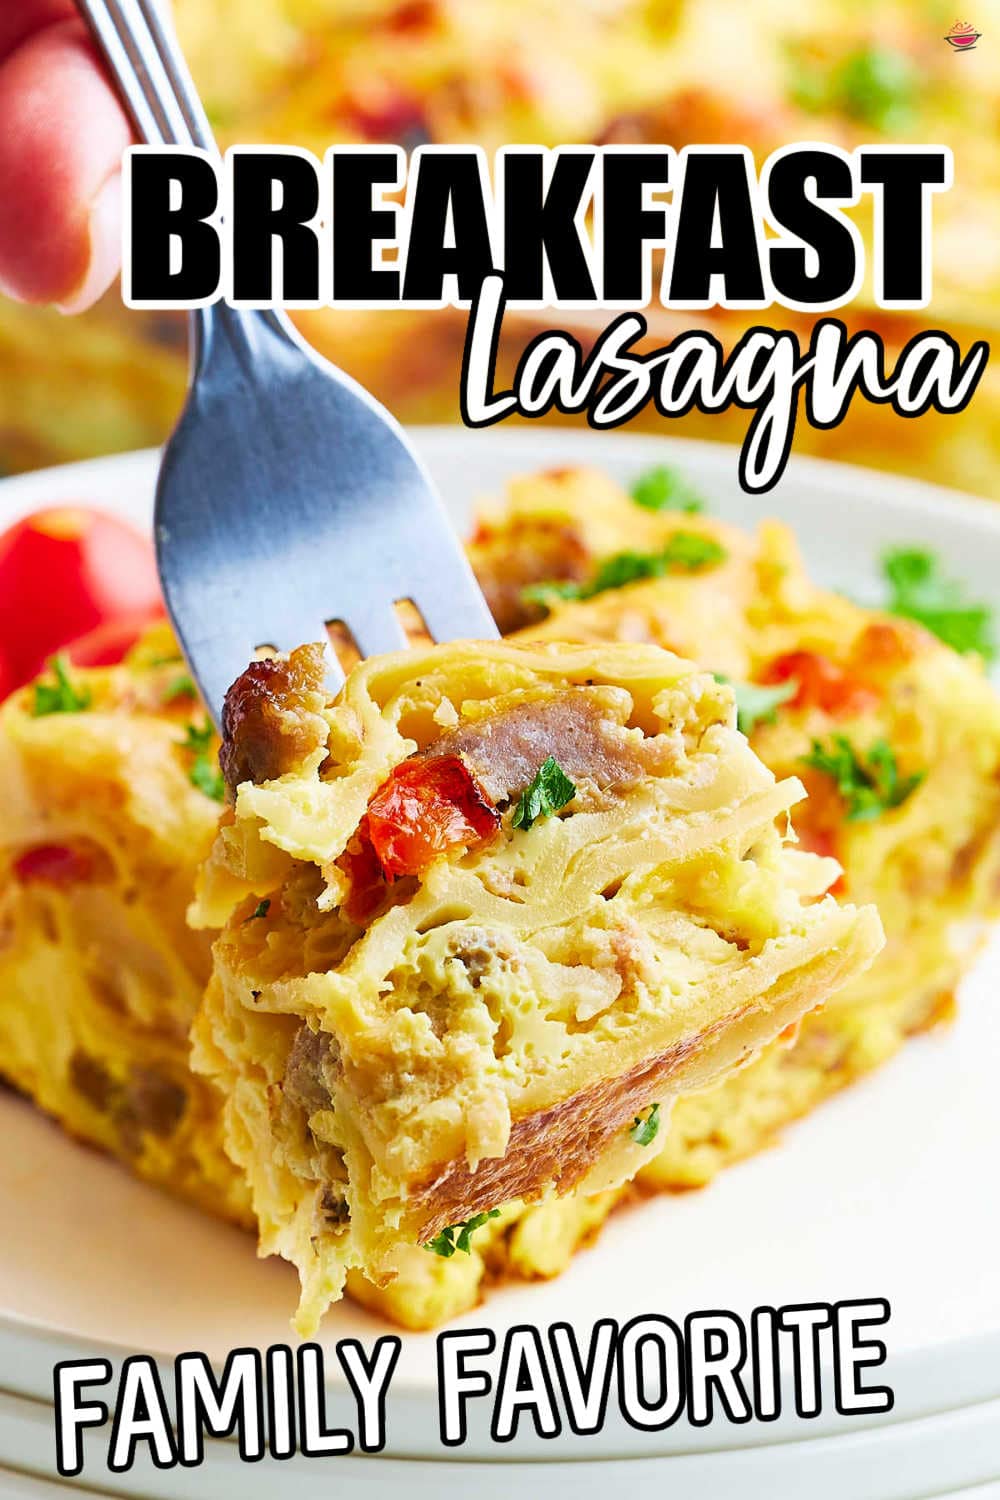 Hearty Breakfast Lasagna - A New Morning Favorite! via @cheerfulcook